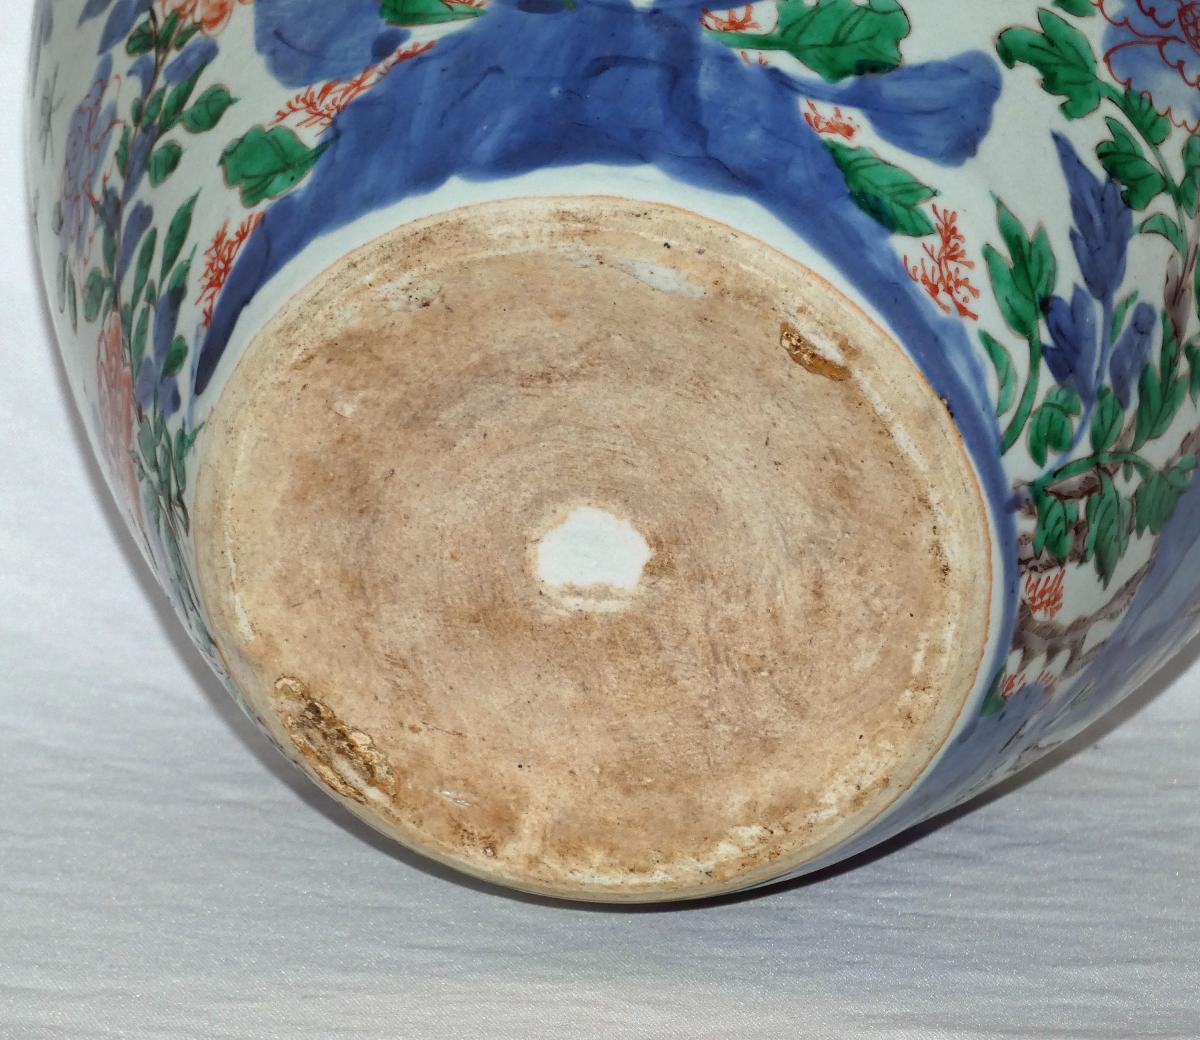 Chinese 17th Century Transitional Wucai Jar